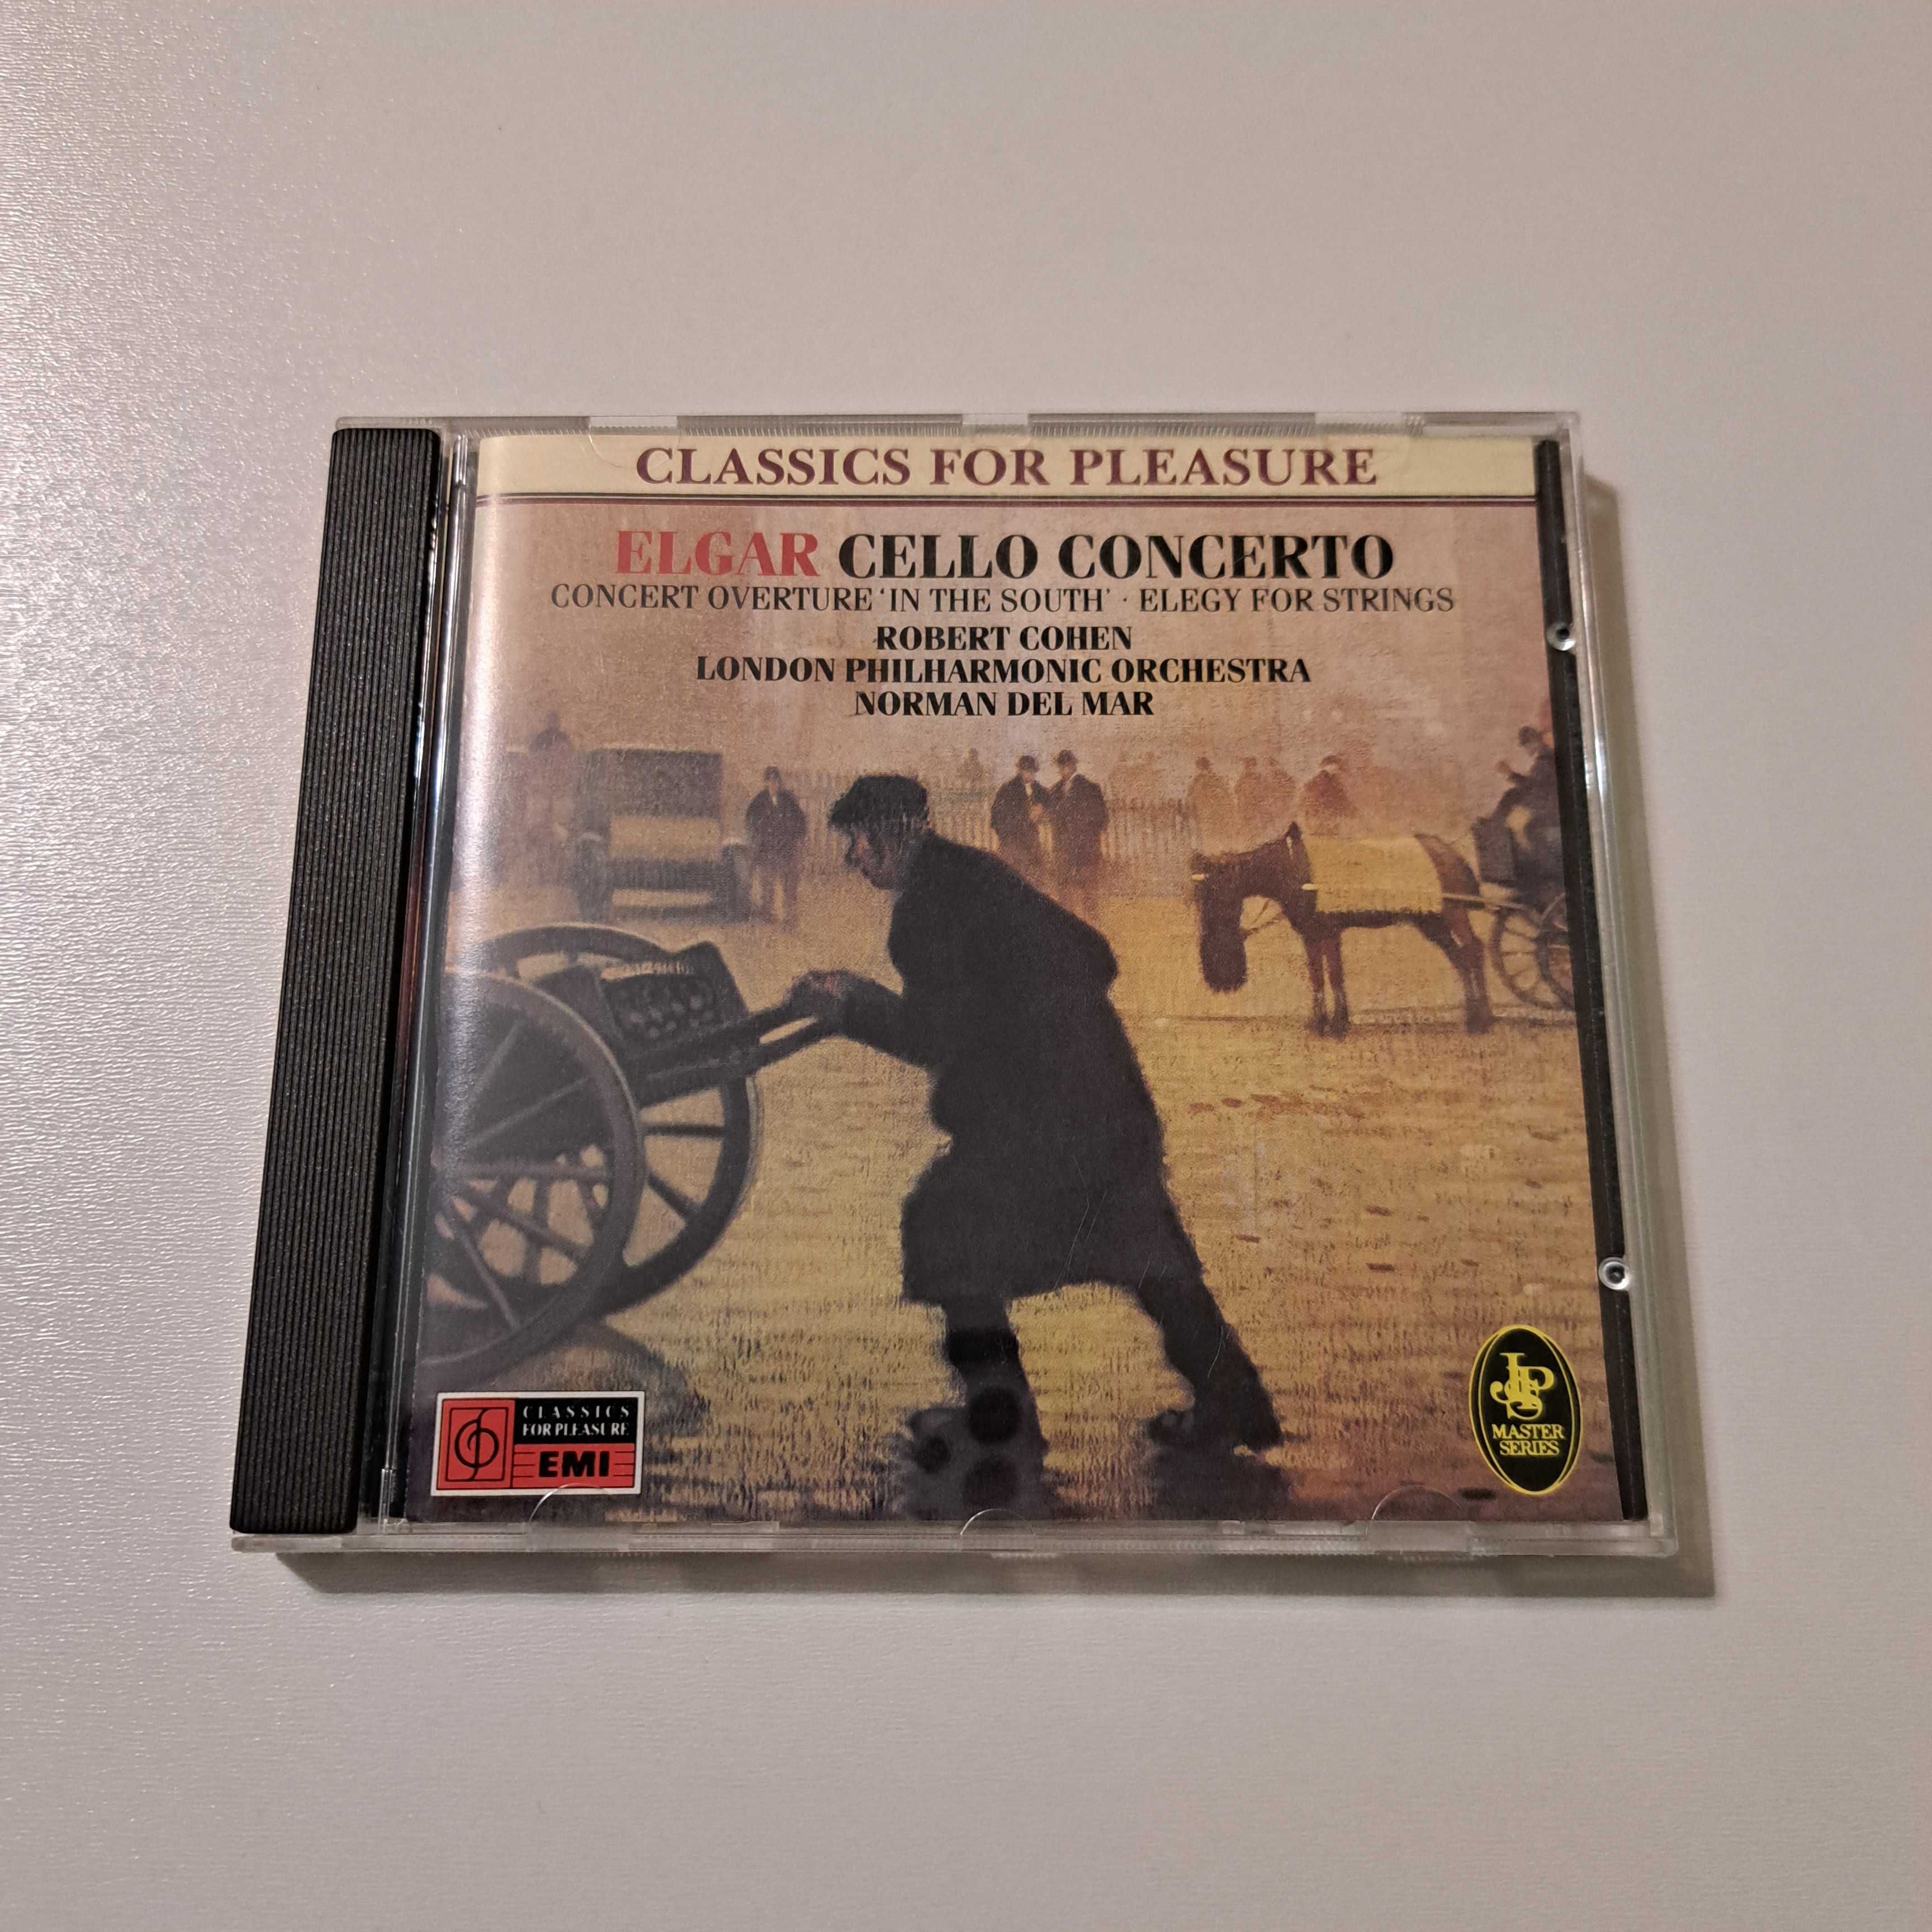 Płyta CD  Elgar Cello Concerto   nr751